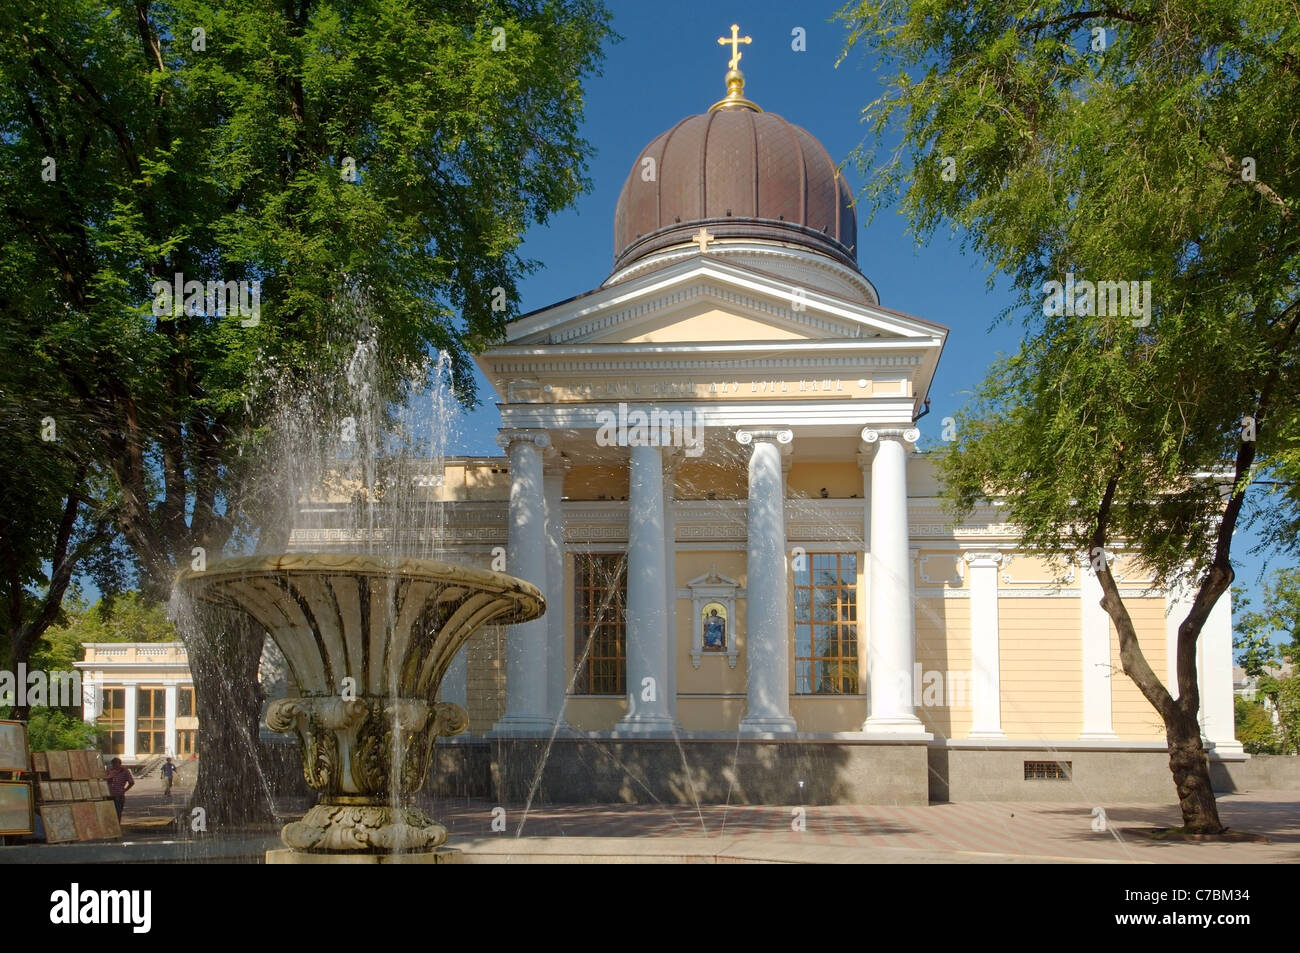 Cathédrale Orthodoxe d'Odessa ou Cathédrale Spaso-preobrajensky, Odessa, Ukraine, Europe Banque D'Images